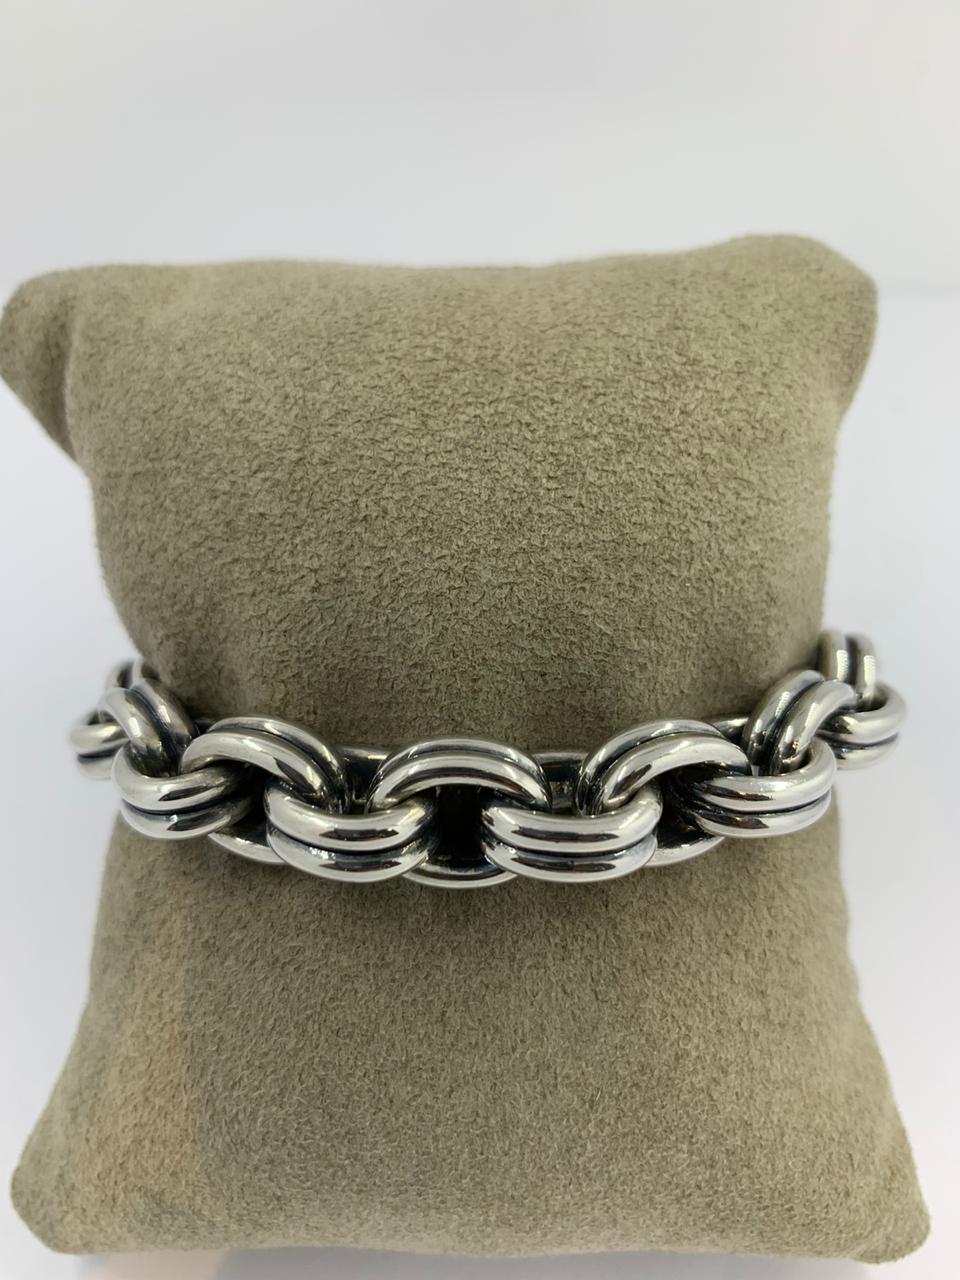 Scott Kay Silver  Bracelet
row of interlink bracelet
SKS-102991 